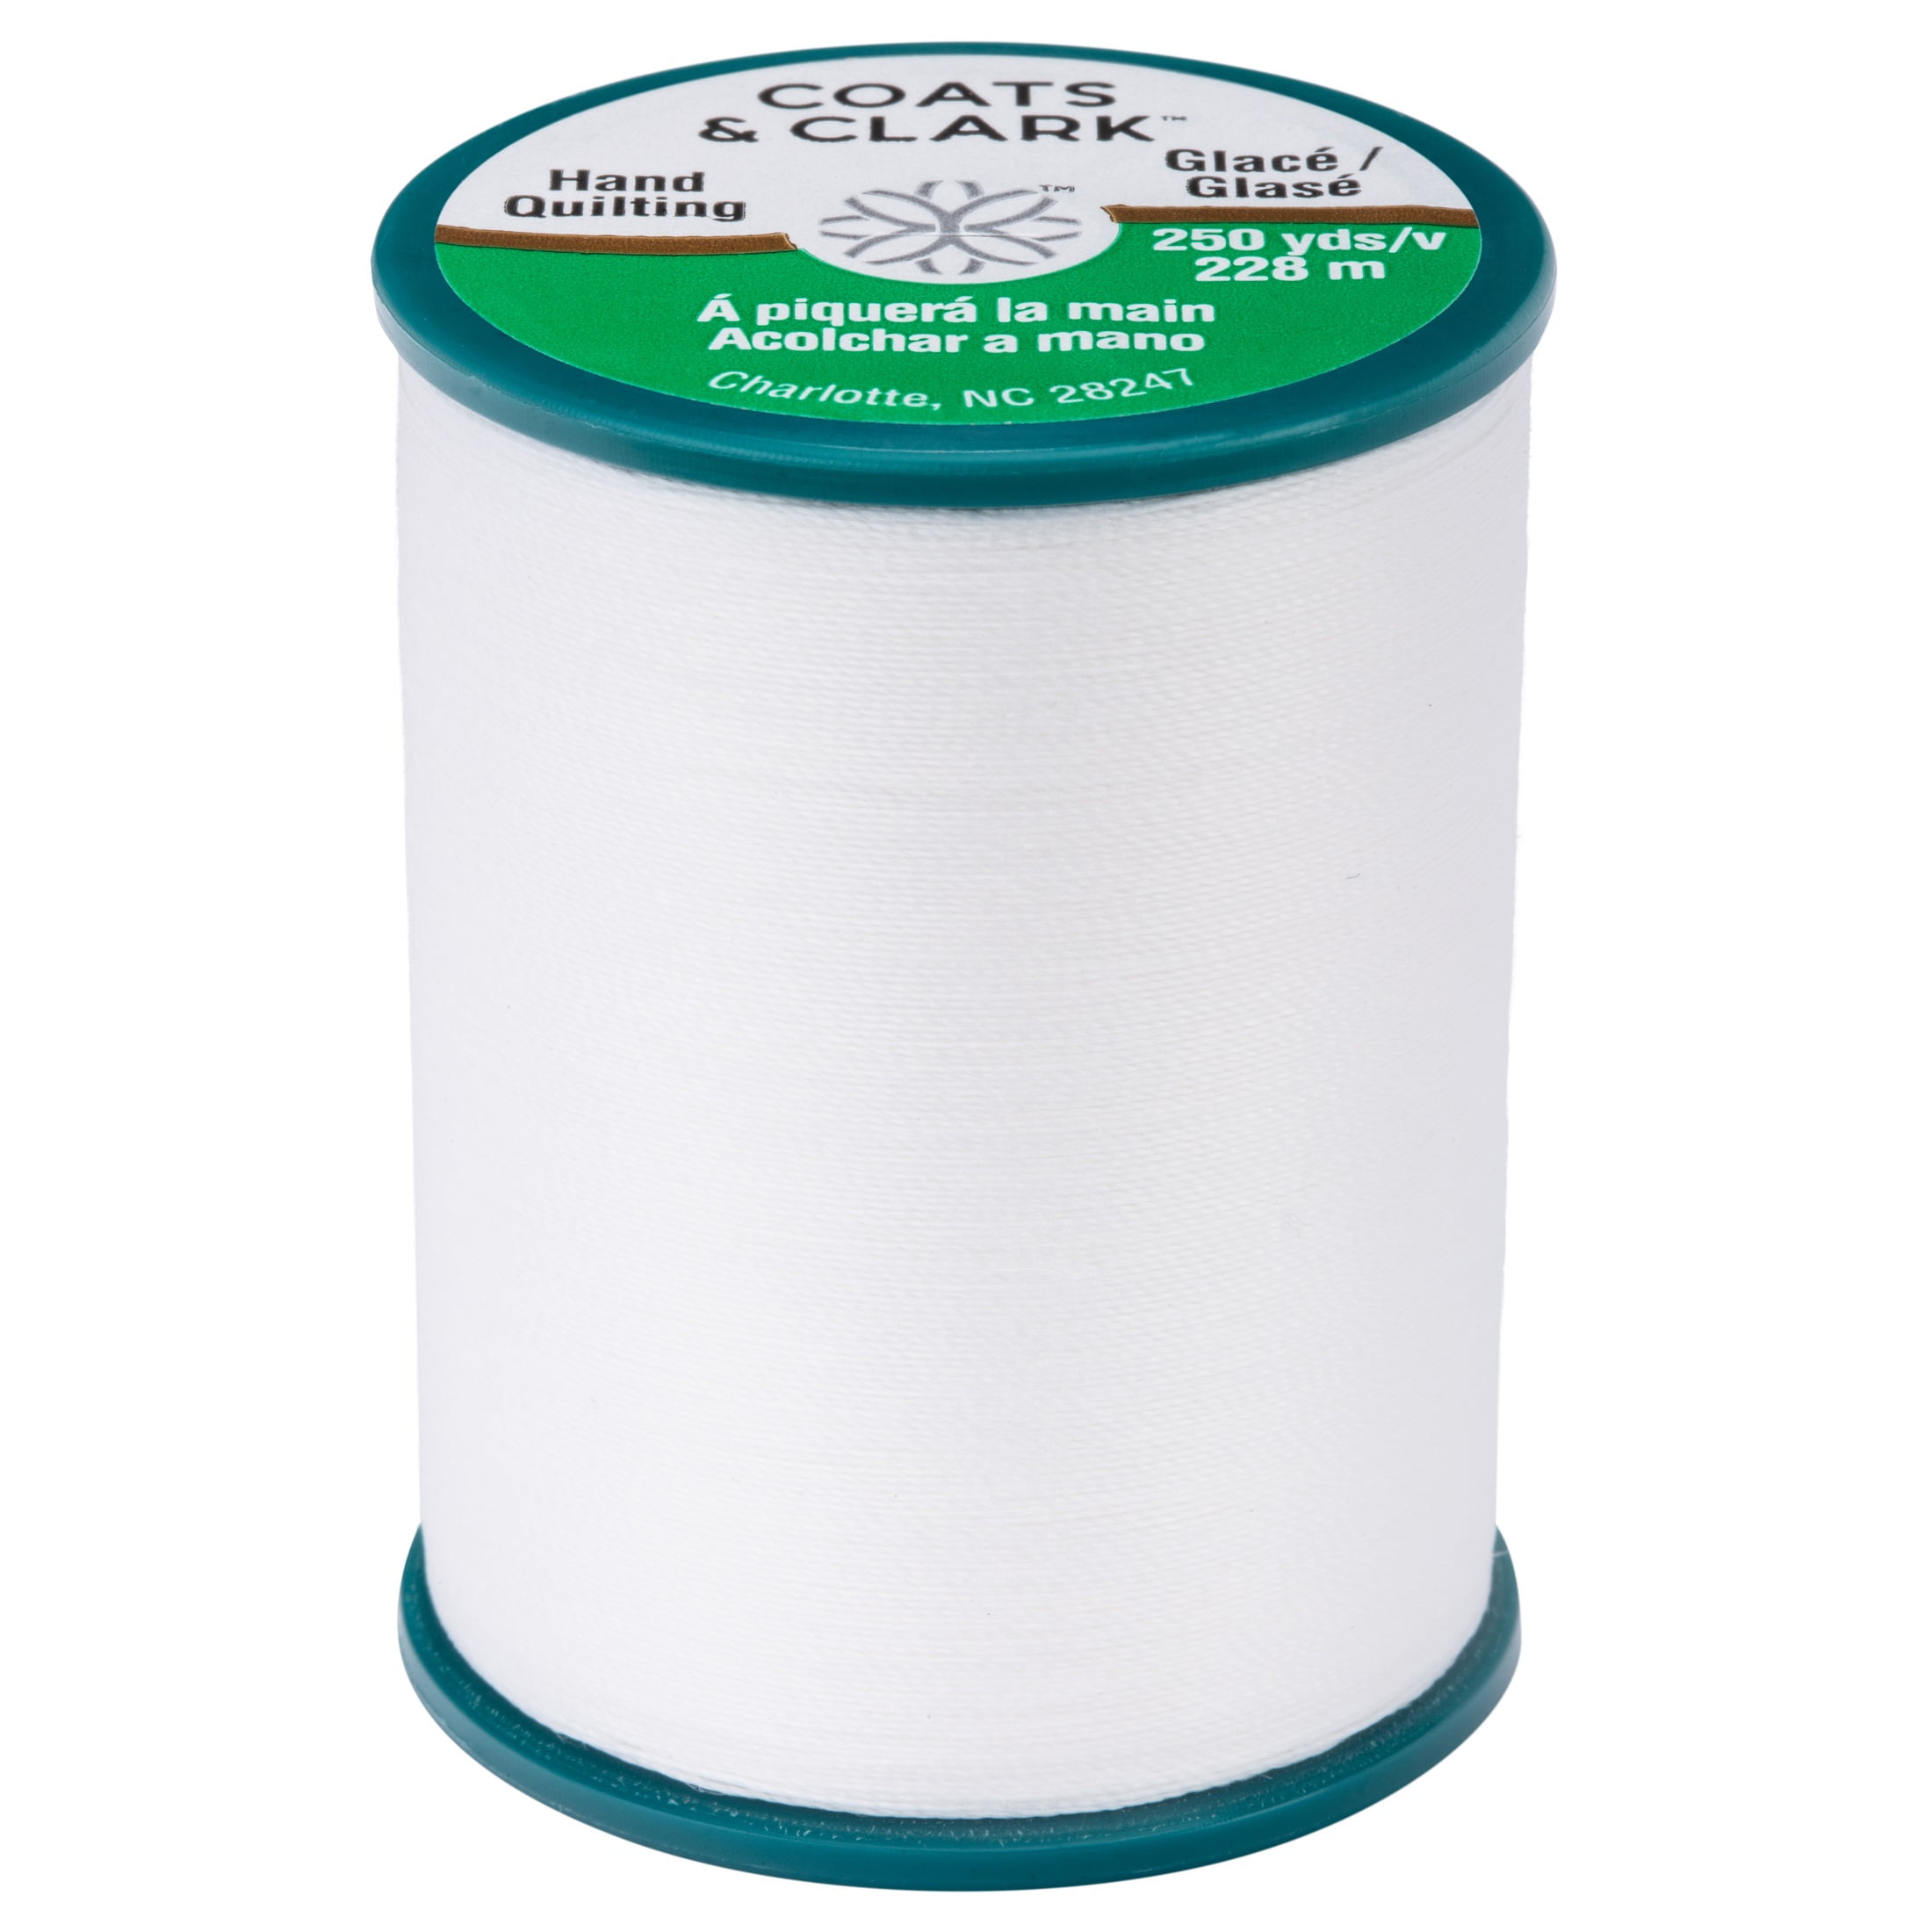 Coats & Clark Transparent™ Polyester Thread